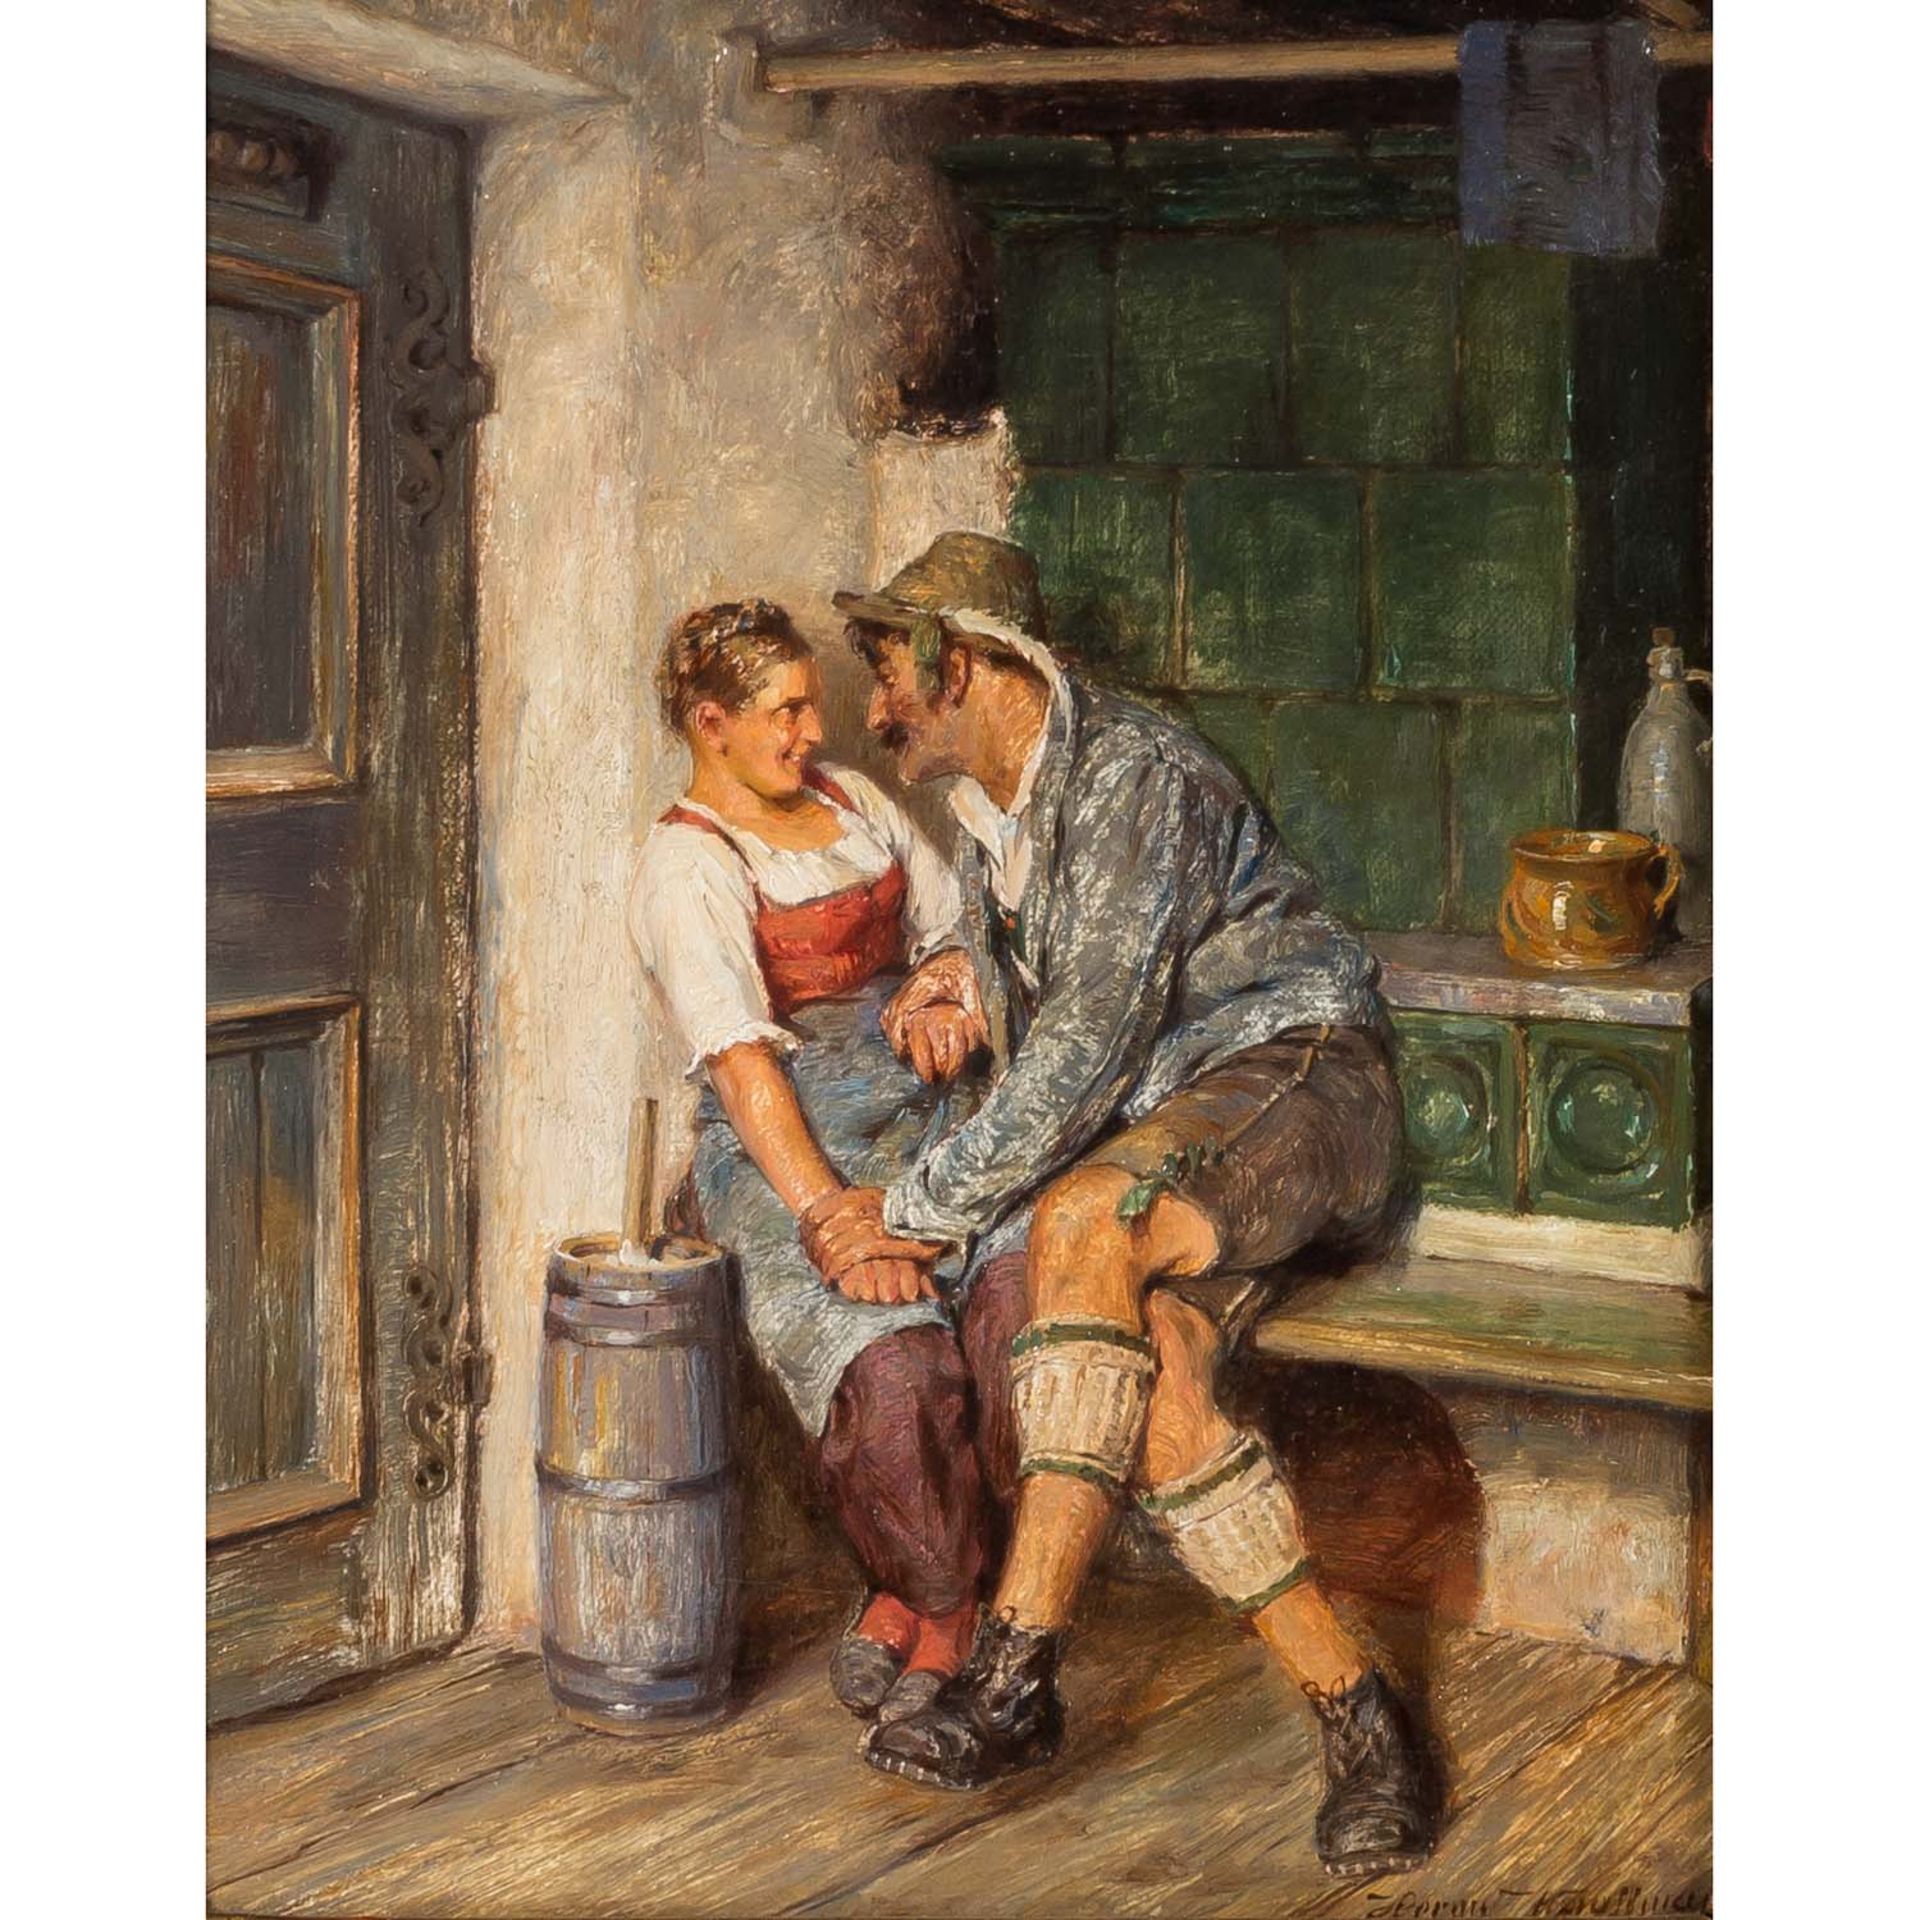 KAUFFMANN, HERMANN (1873-1953) "Am Kachelofen sitzendes Paar"